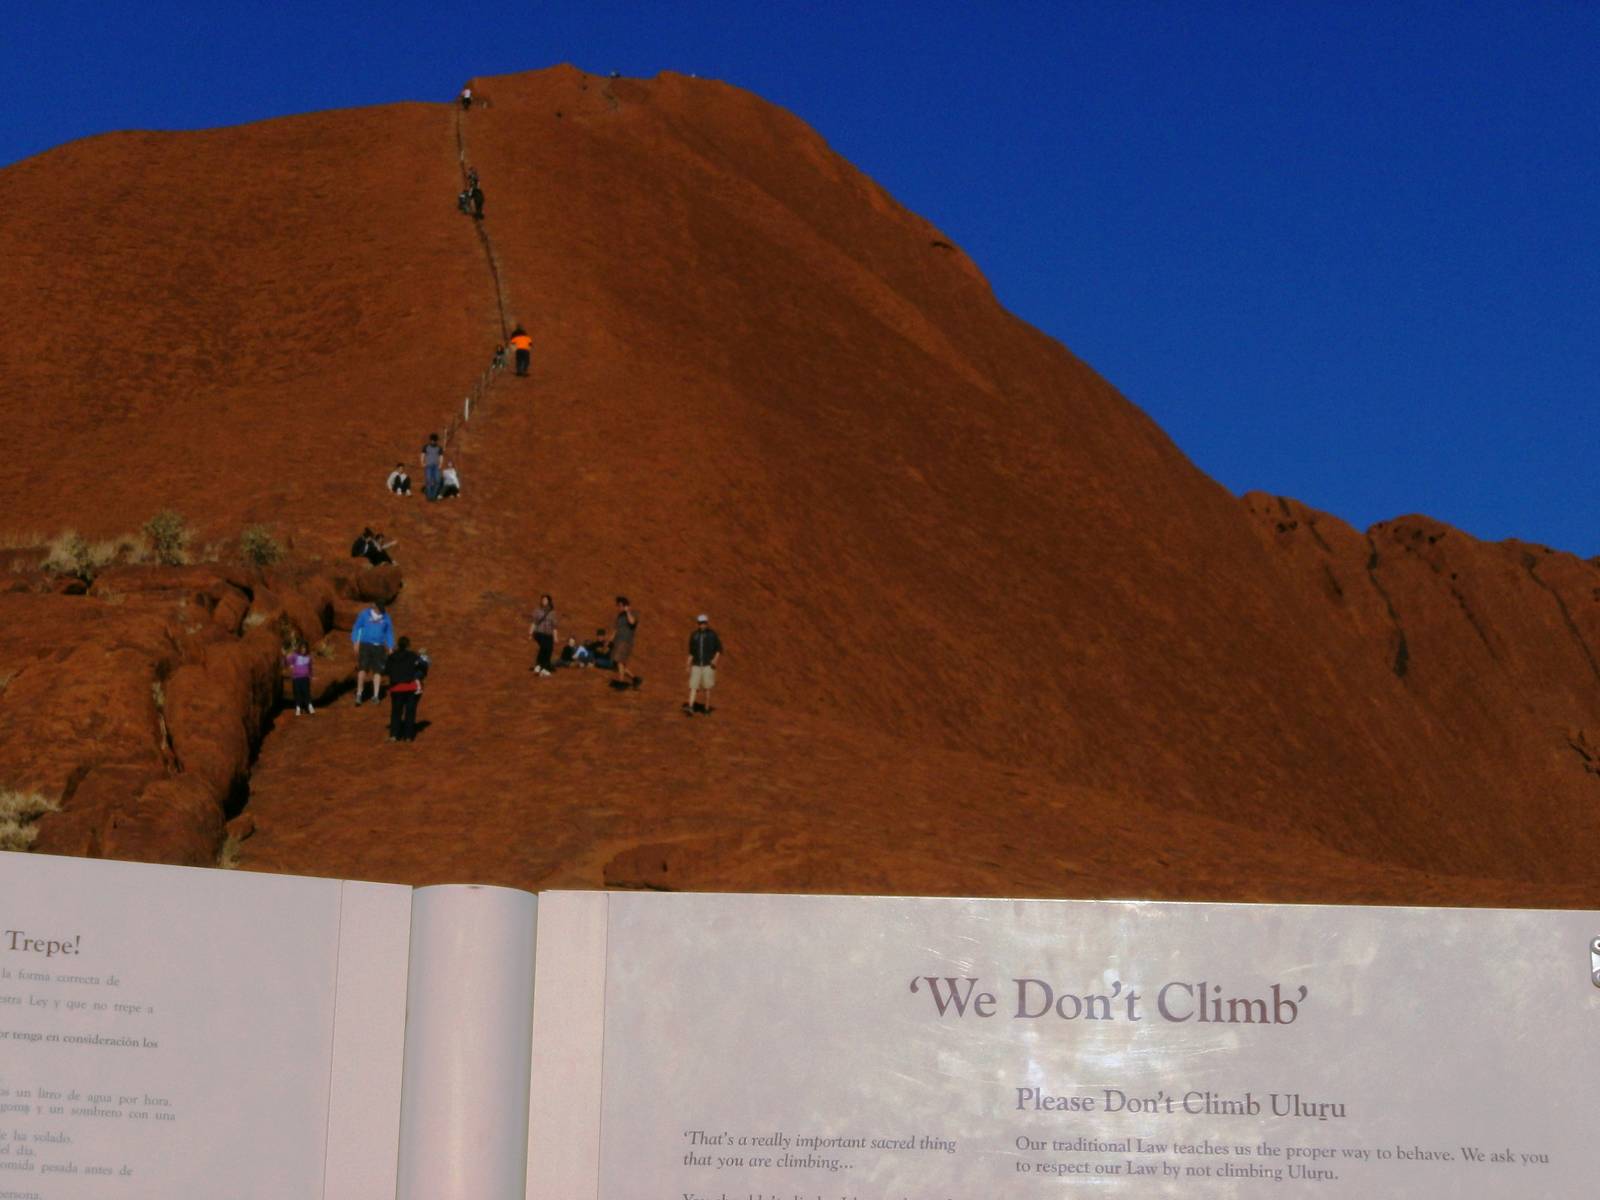 Please don't climb Uluru